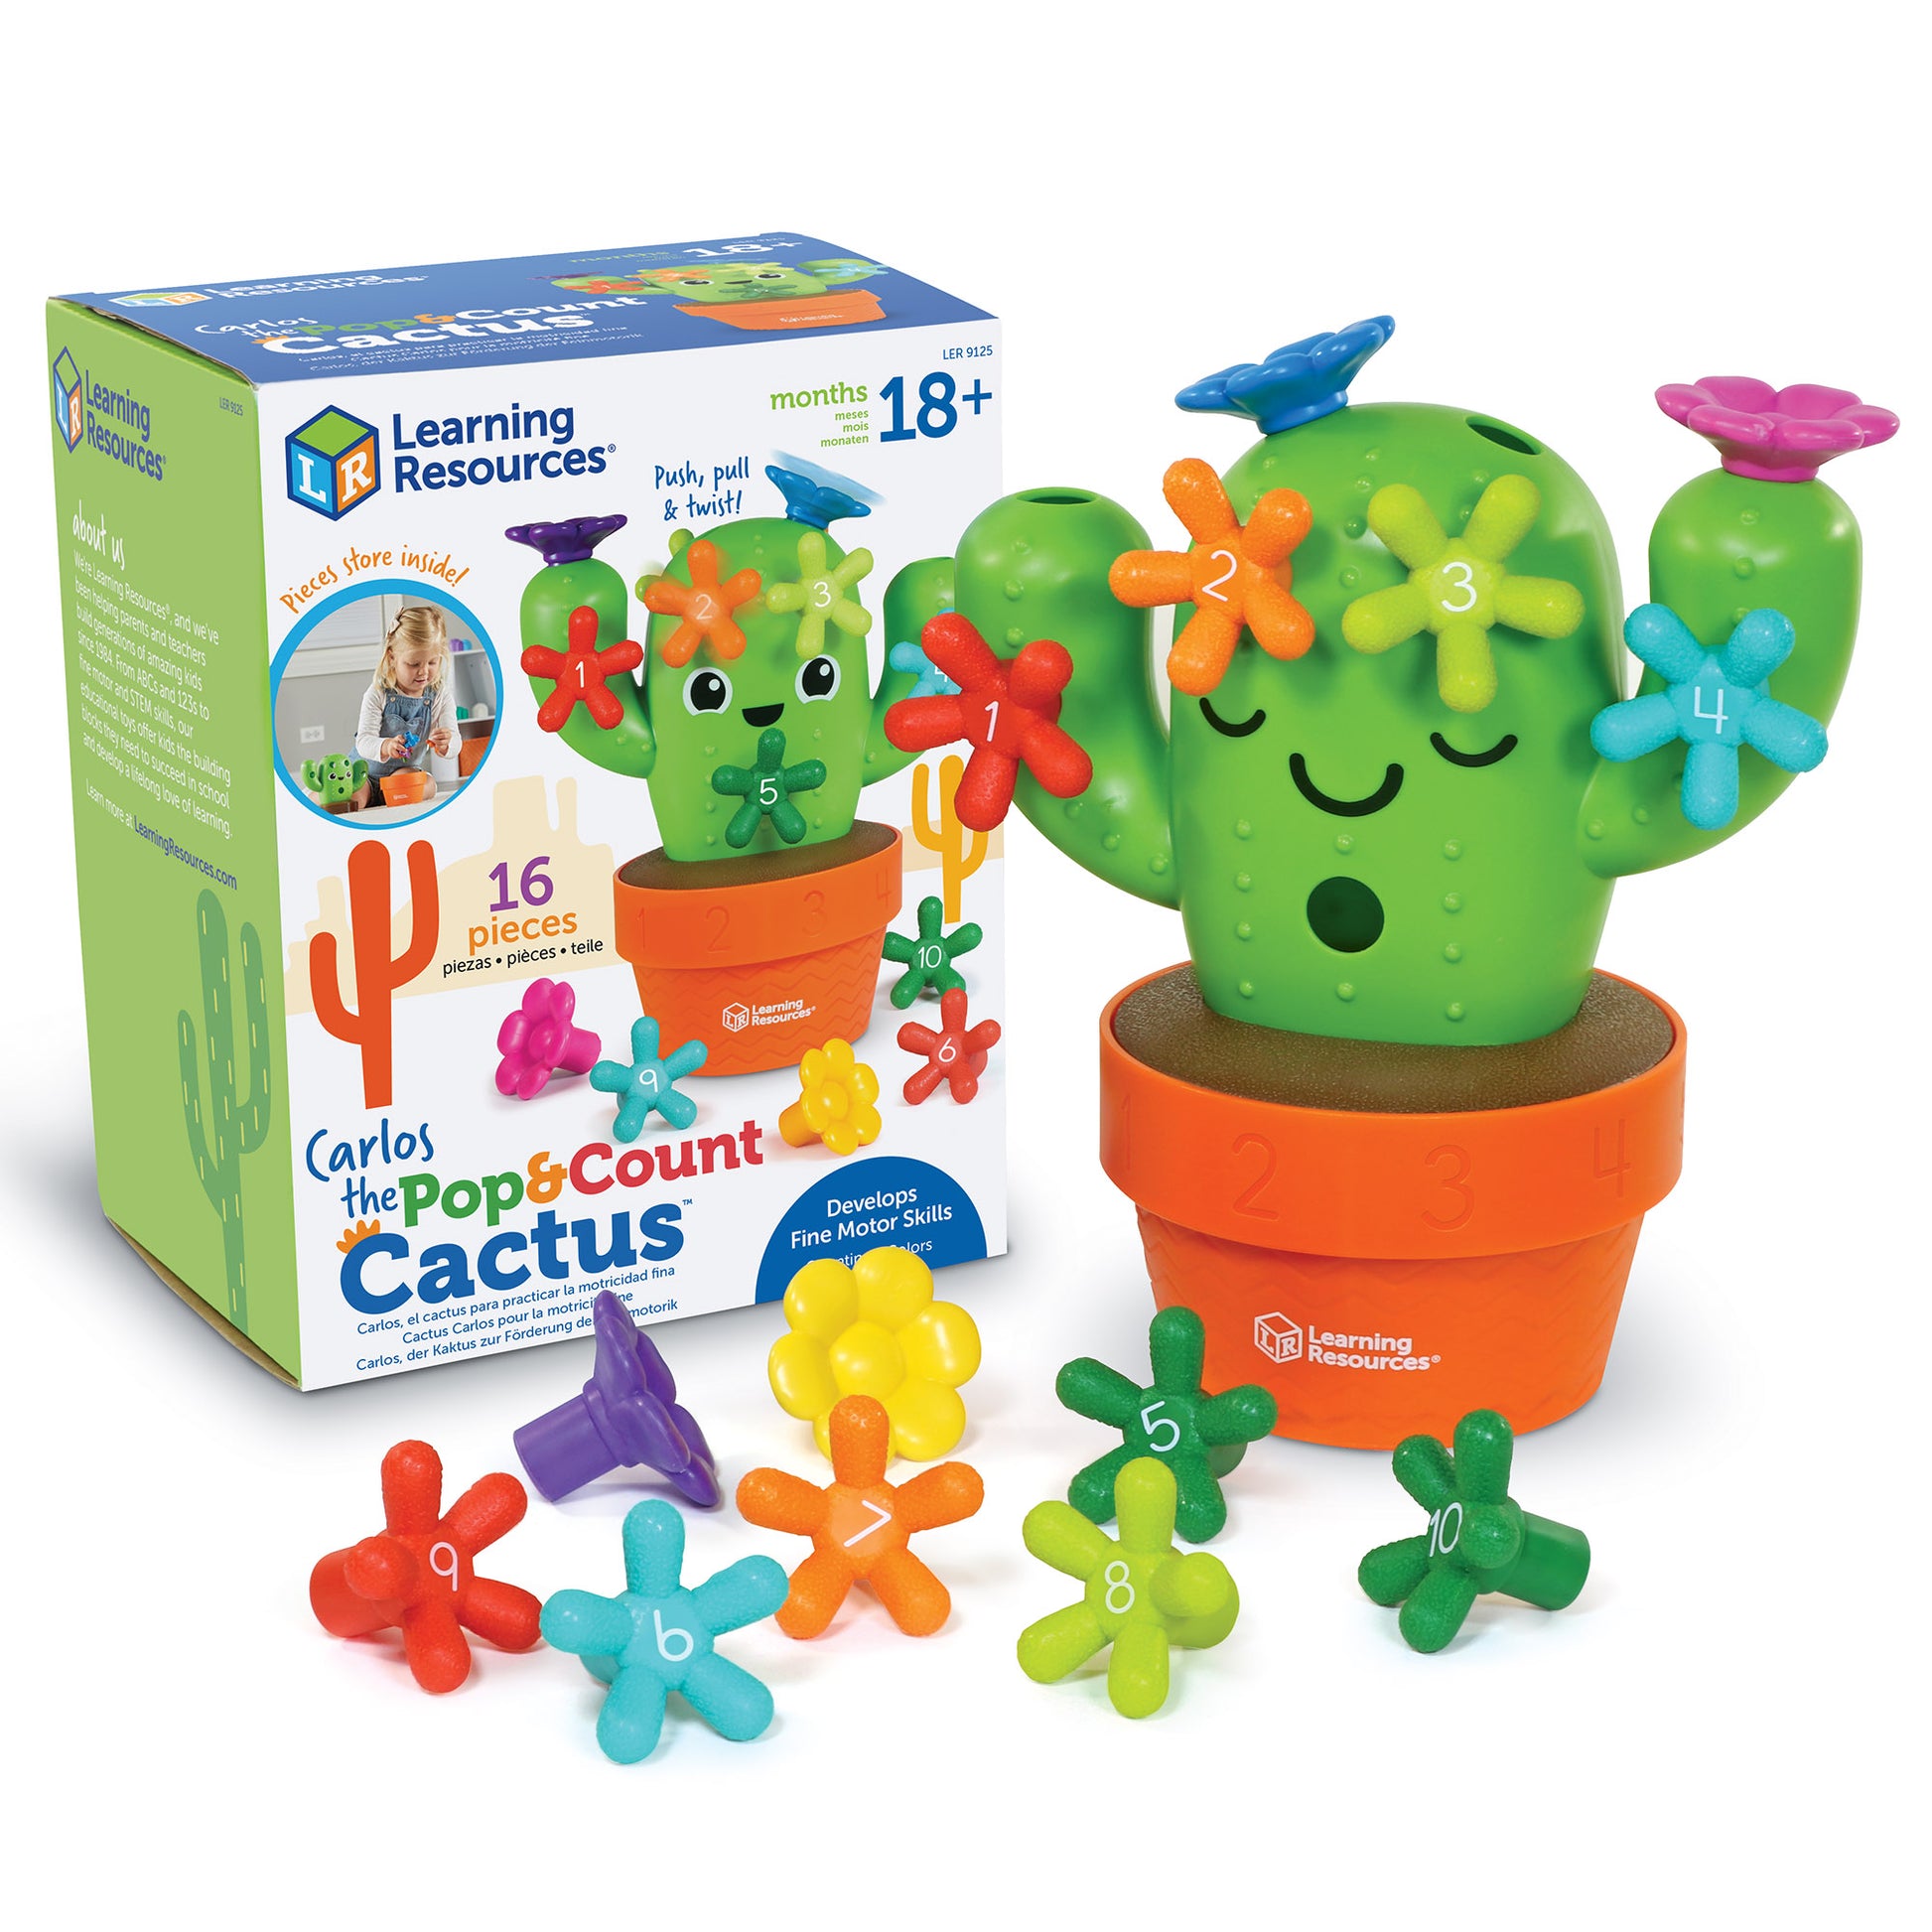 carlos, the pop & count cactus